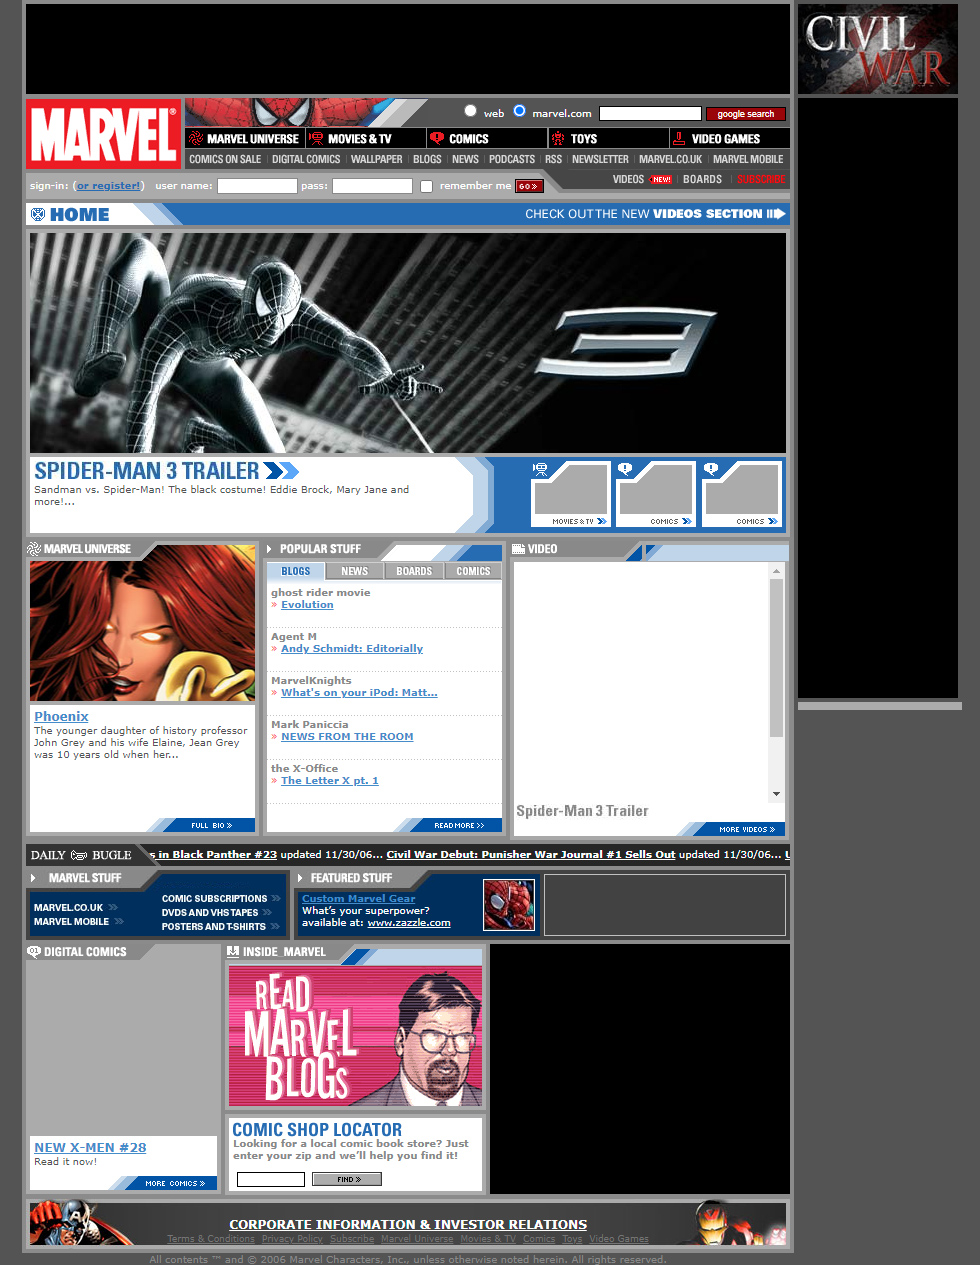 Marvel website in 2006